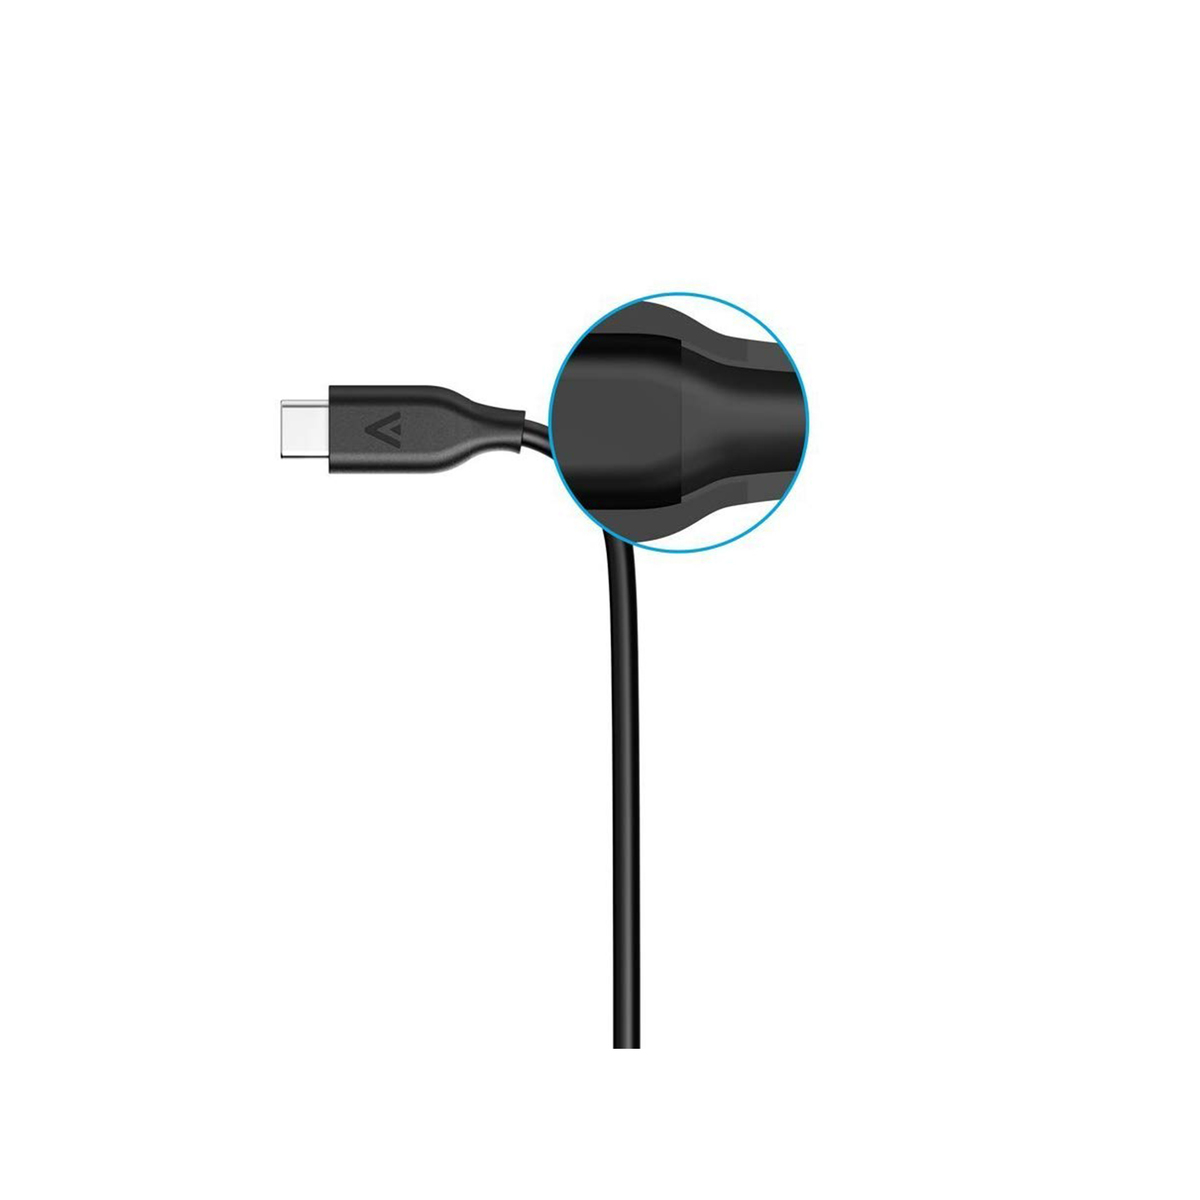 Anker  USB-C to USB-C 2.0 Cable (3feet) A8187HA1 Grey